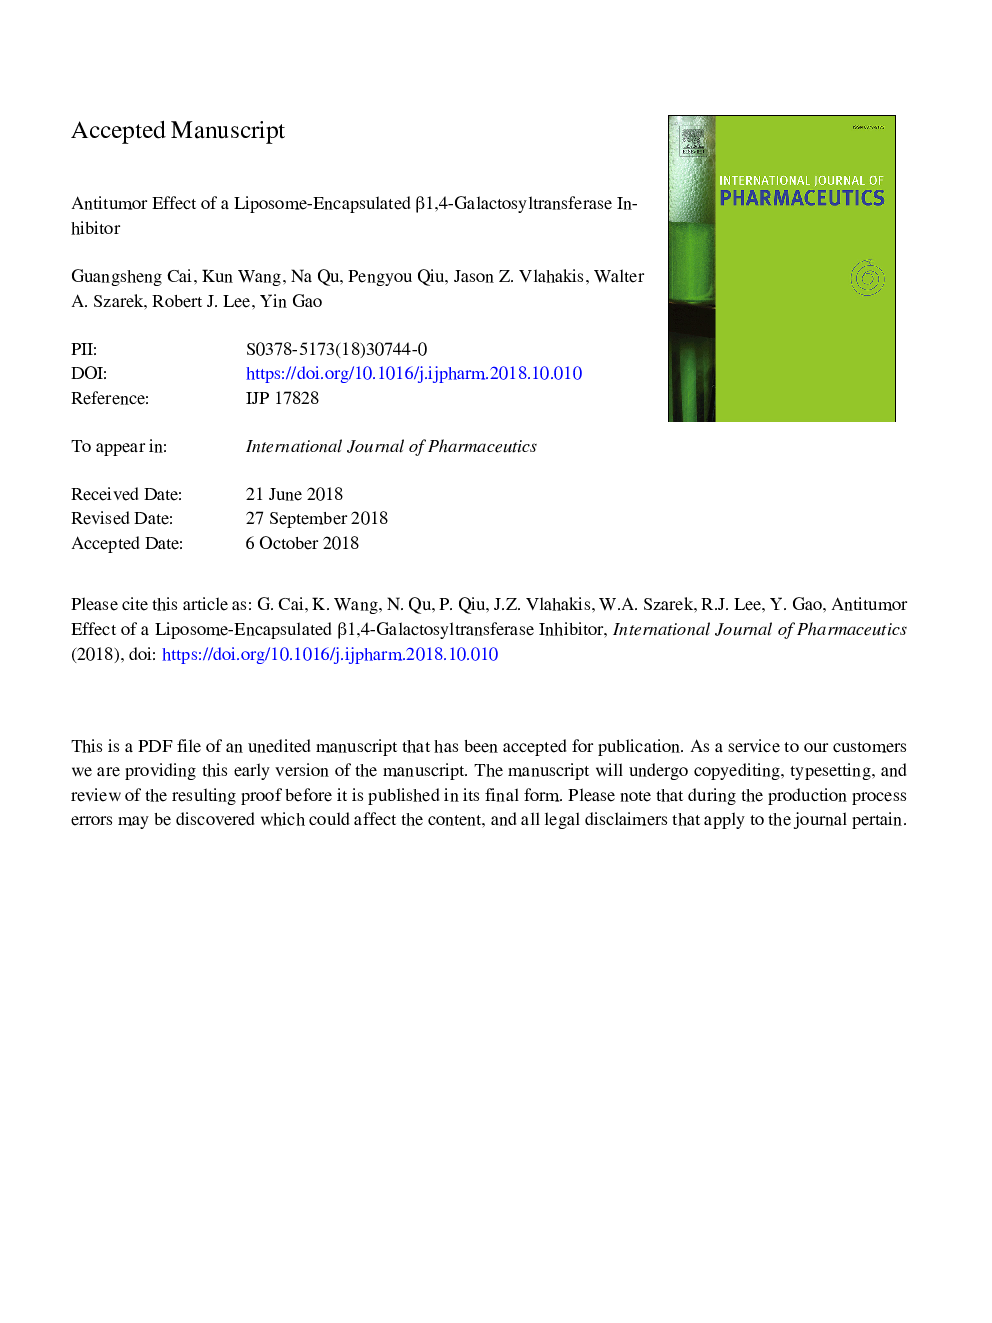 Antitumor effect of a liposome-encapsulated Î²1,4-galactosyltransferase inhibitor